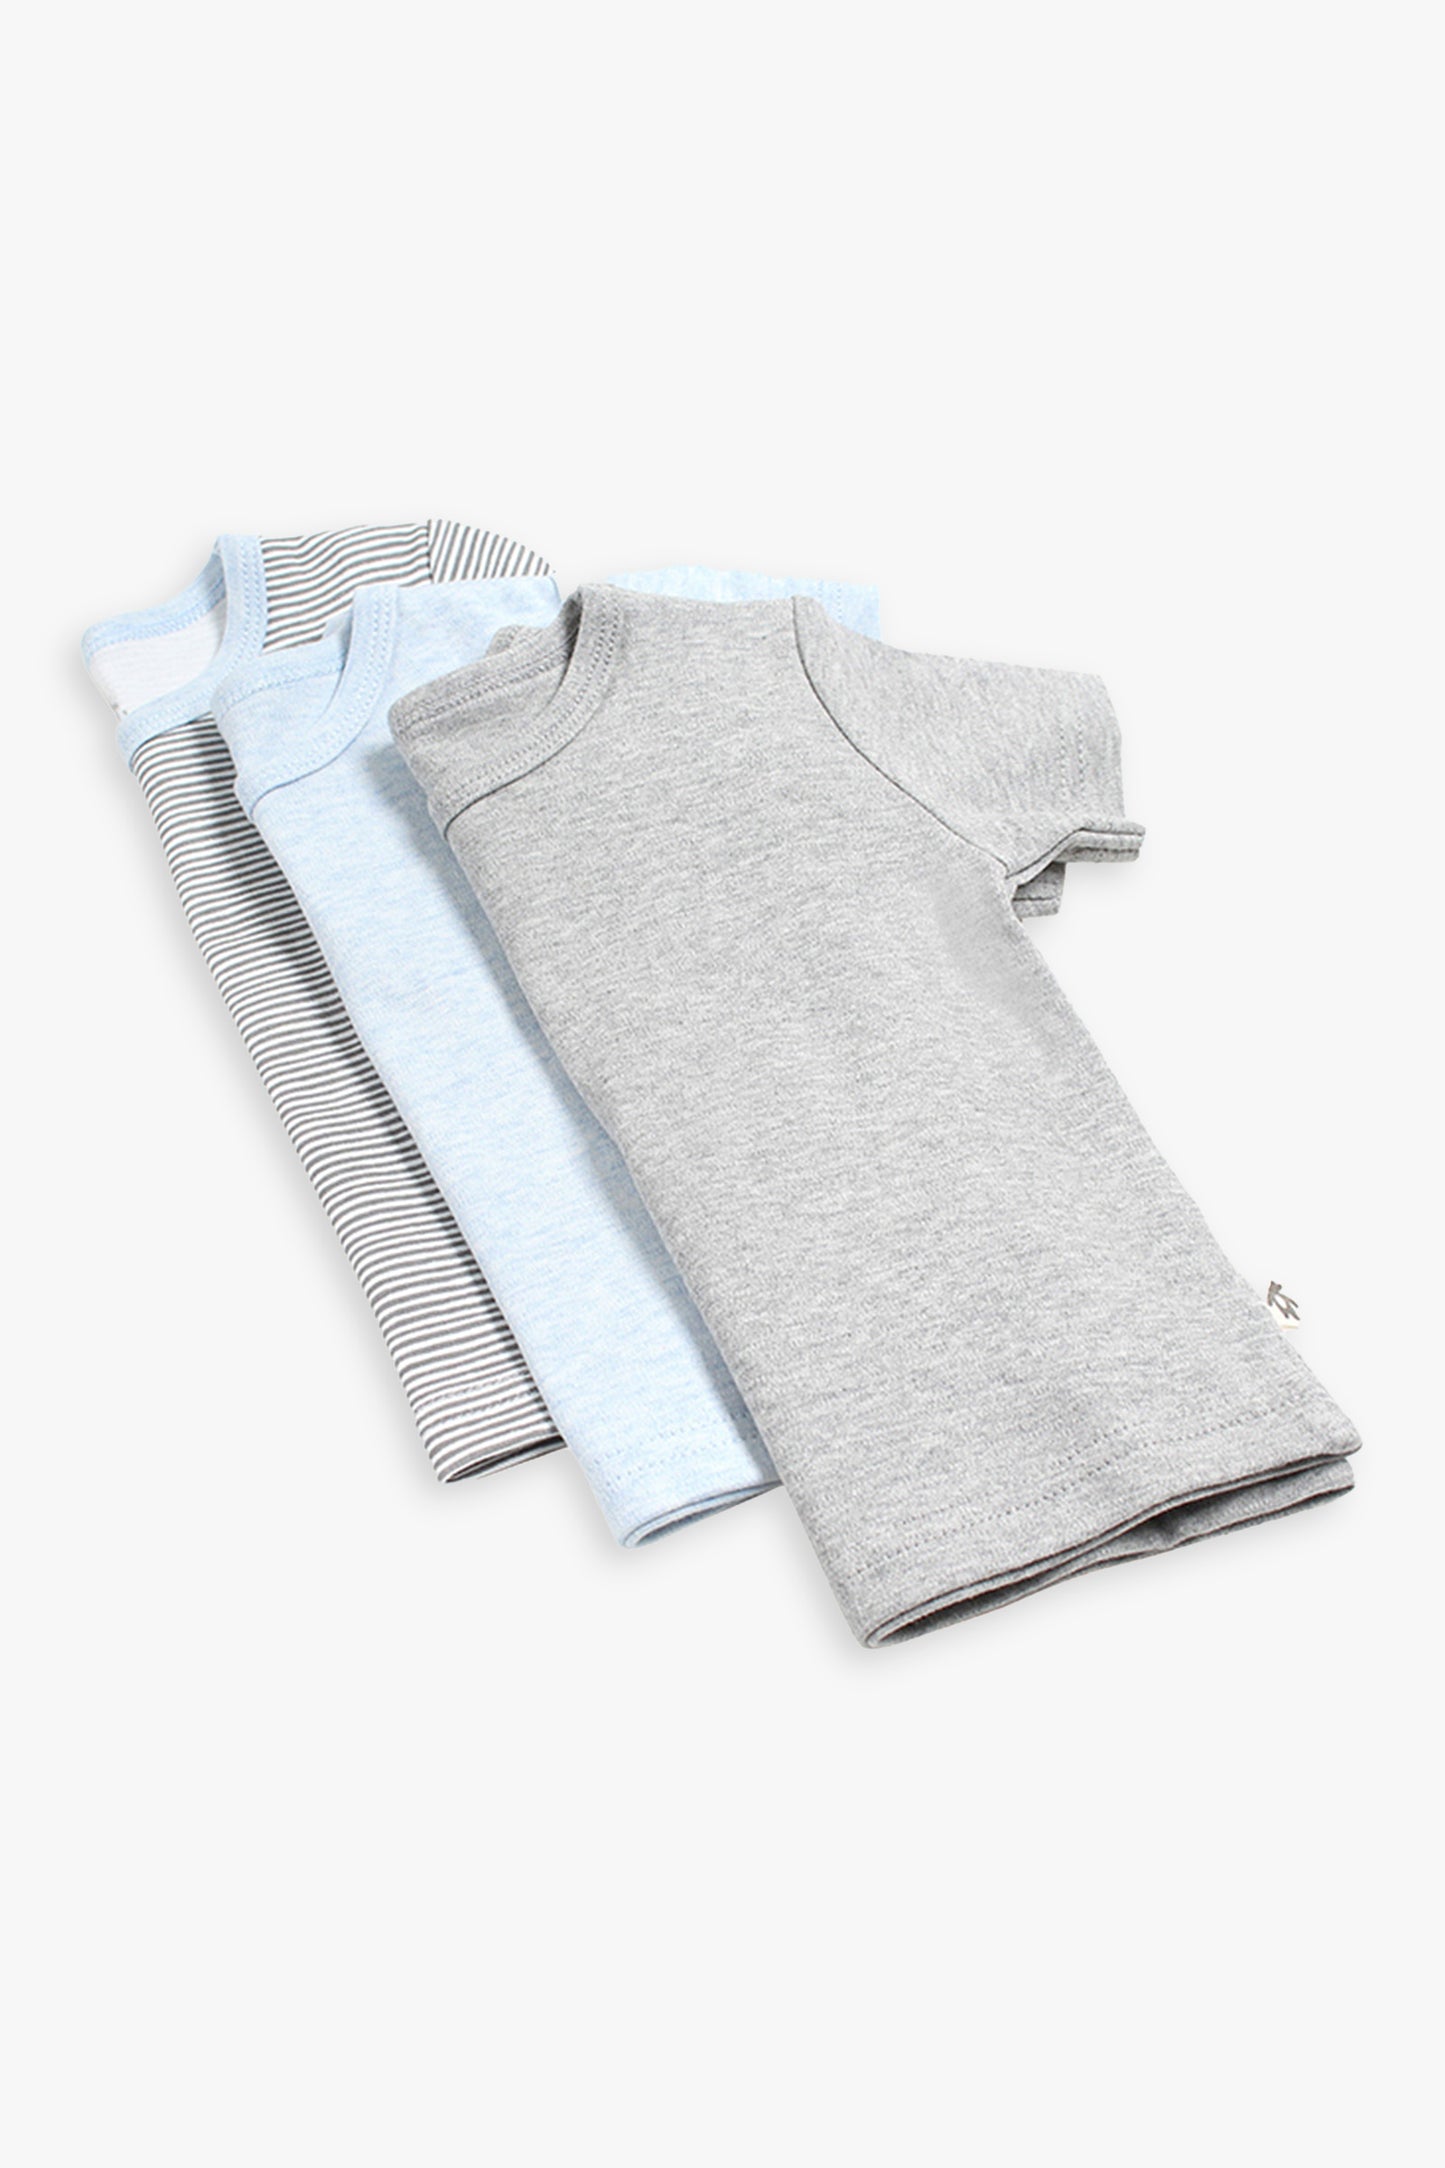 Baby Dream 3-Pack Short Sleeve T-Shirts